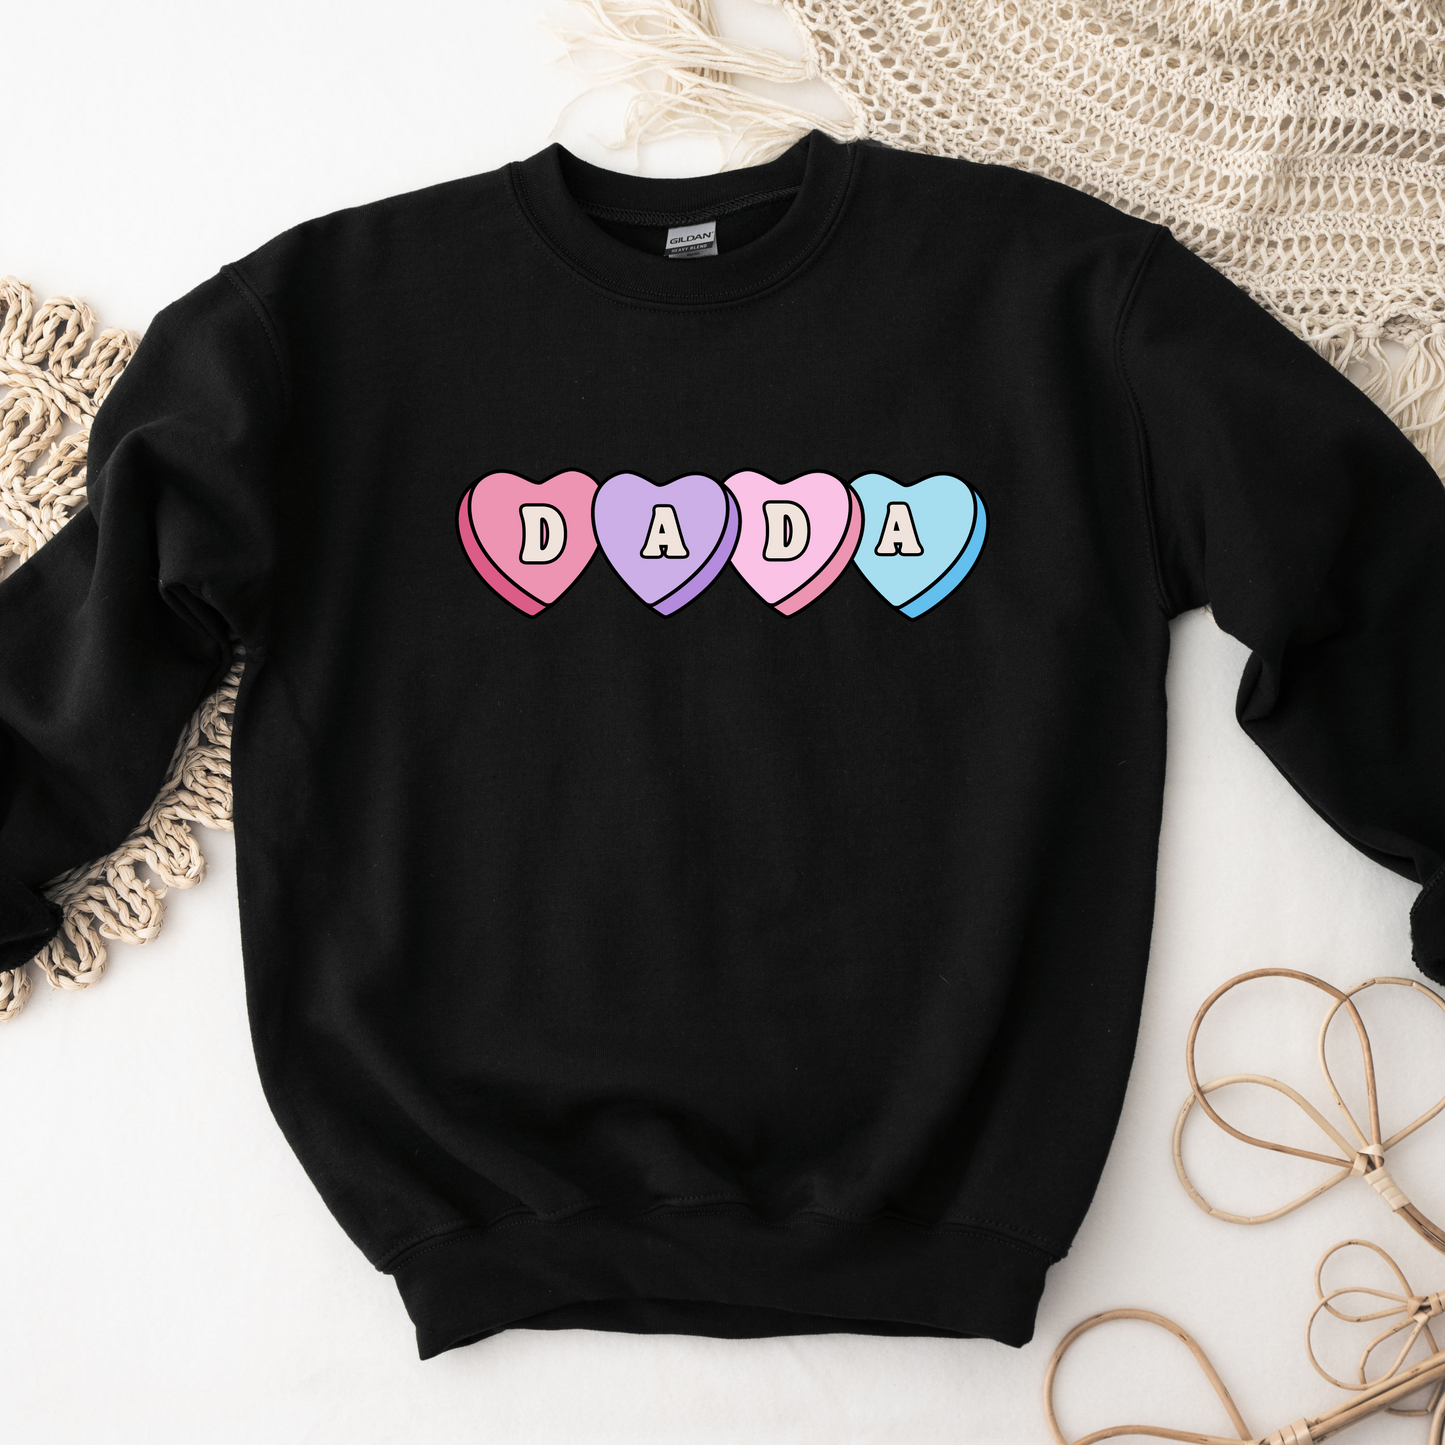 Pastel hearts sweatshirt/t-shirt (choose your design)